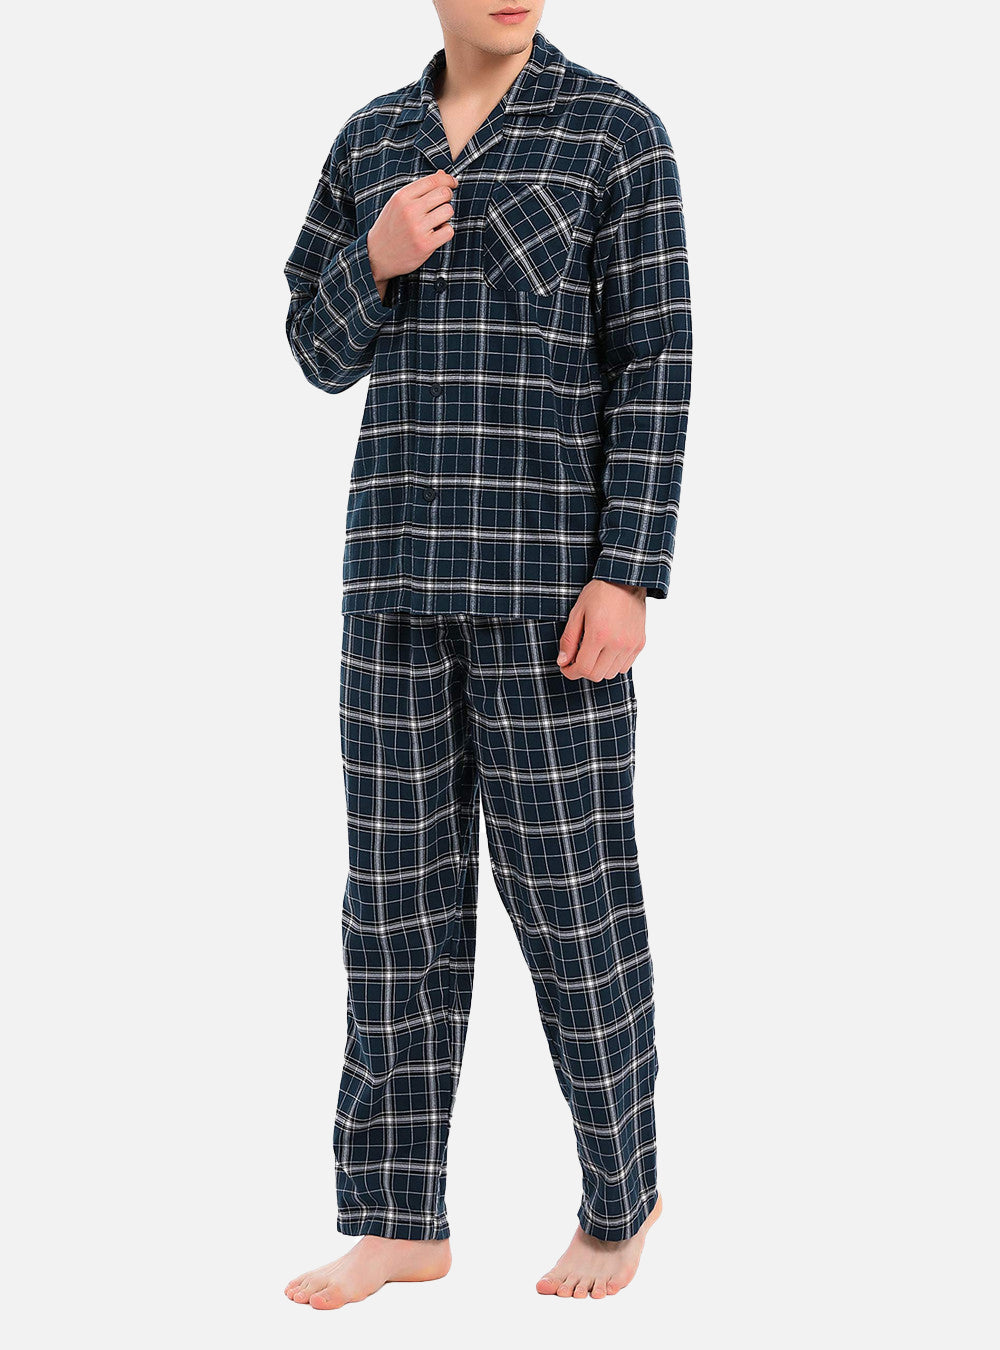 David Archy Sleepwear Set Flannel Button-Down V-Neck Lounge Wear Flannel  Pajamas